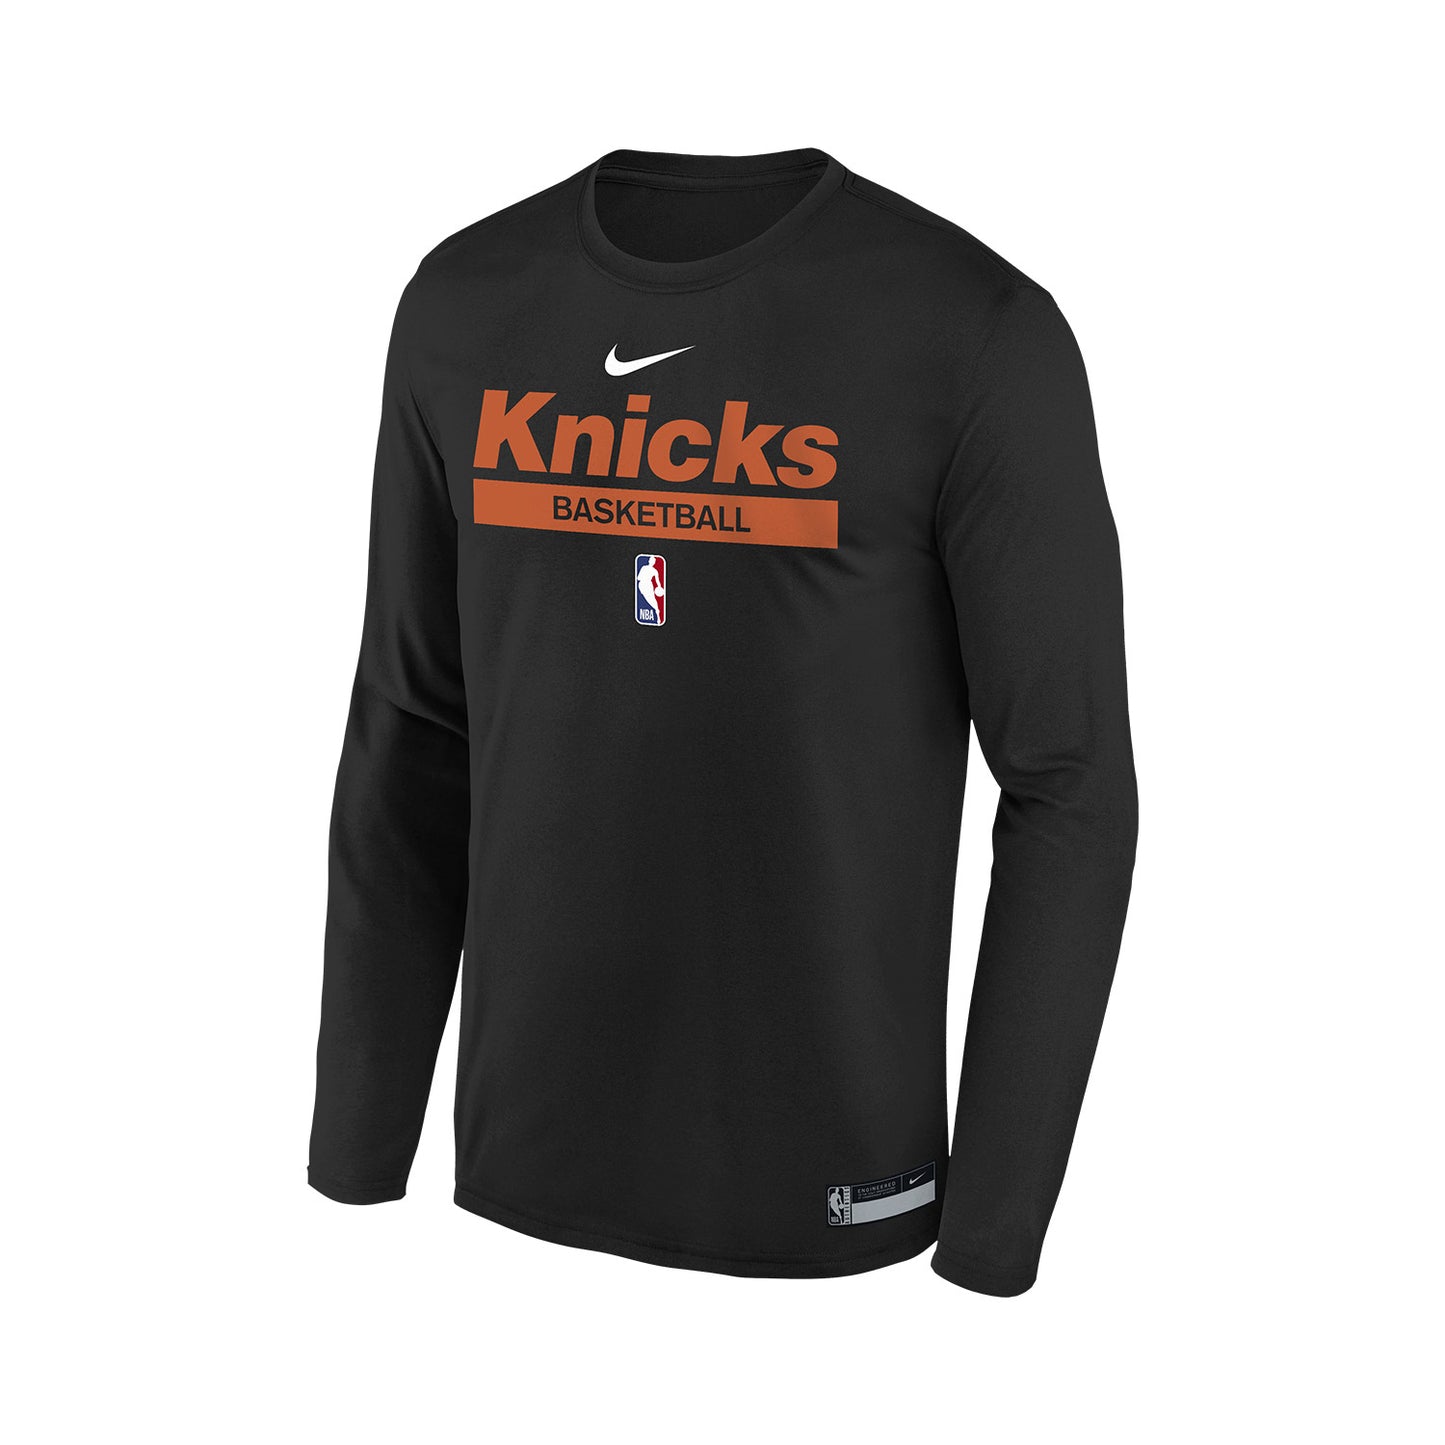 Youth Nike Knicks Dri-Fit Practice Graphic Longsleeve Tee In Black & Orange - Front View